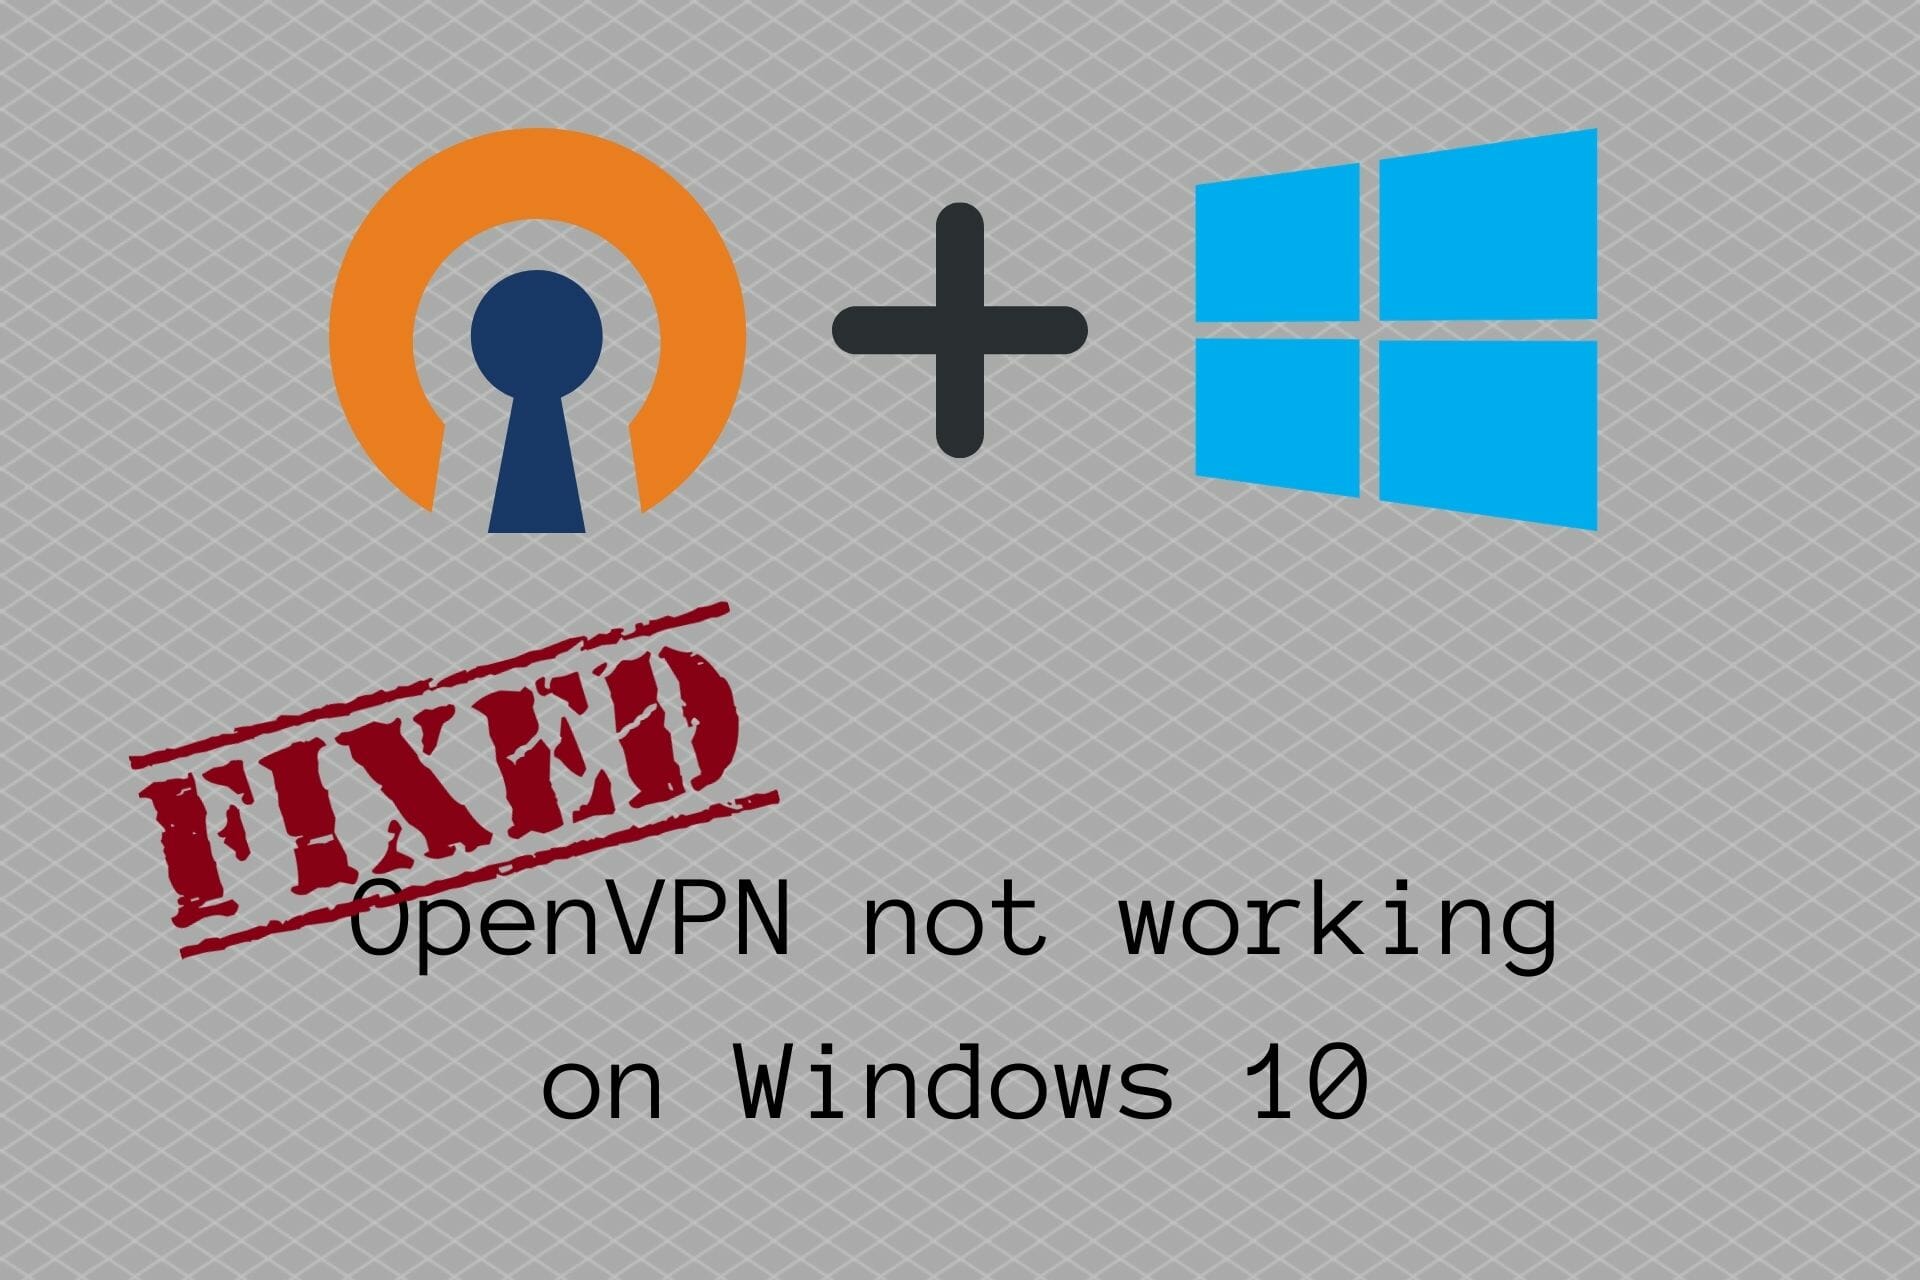 openvpn connect windows 8